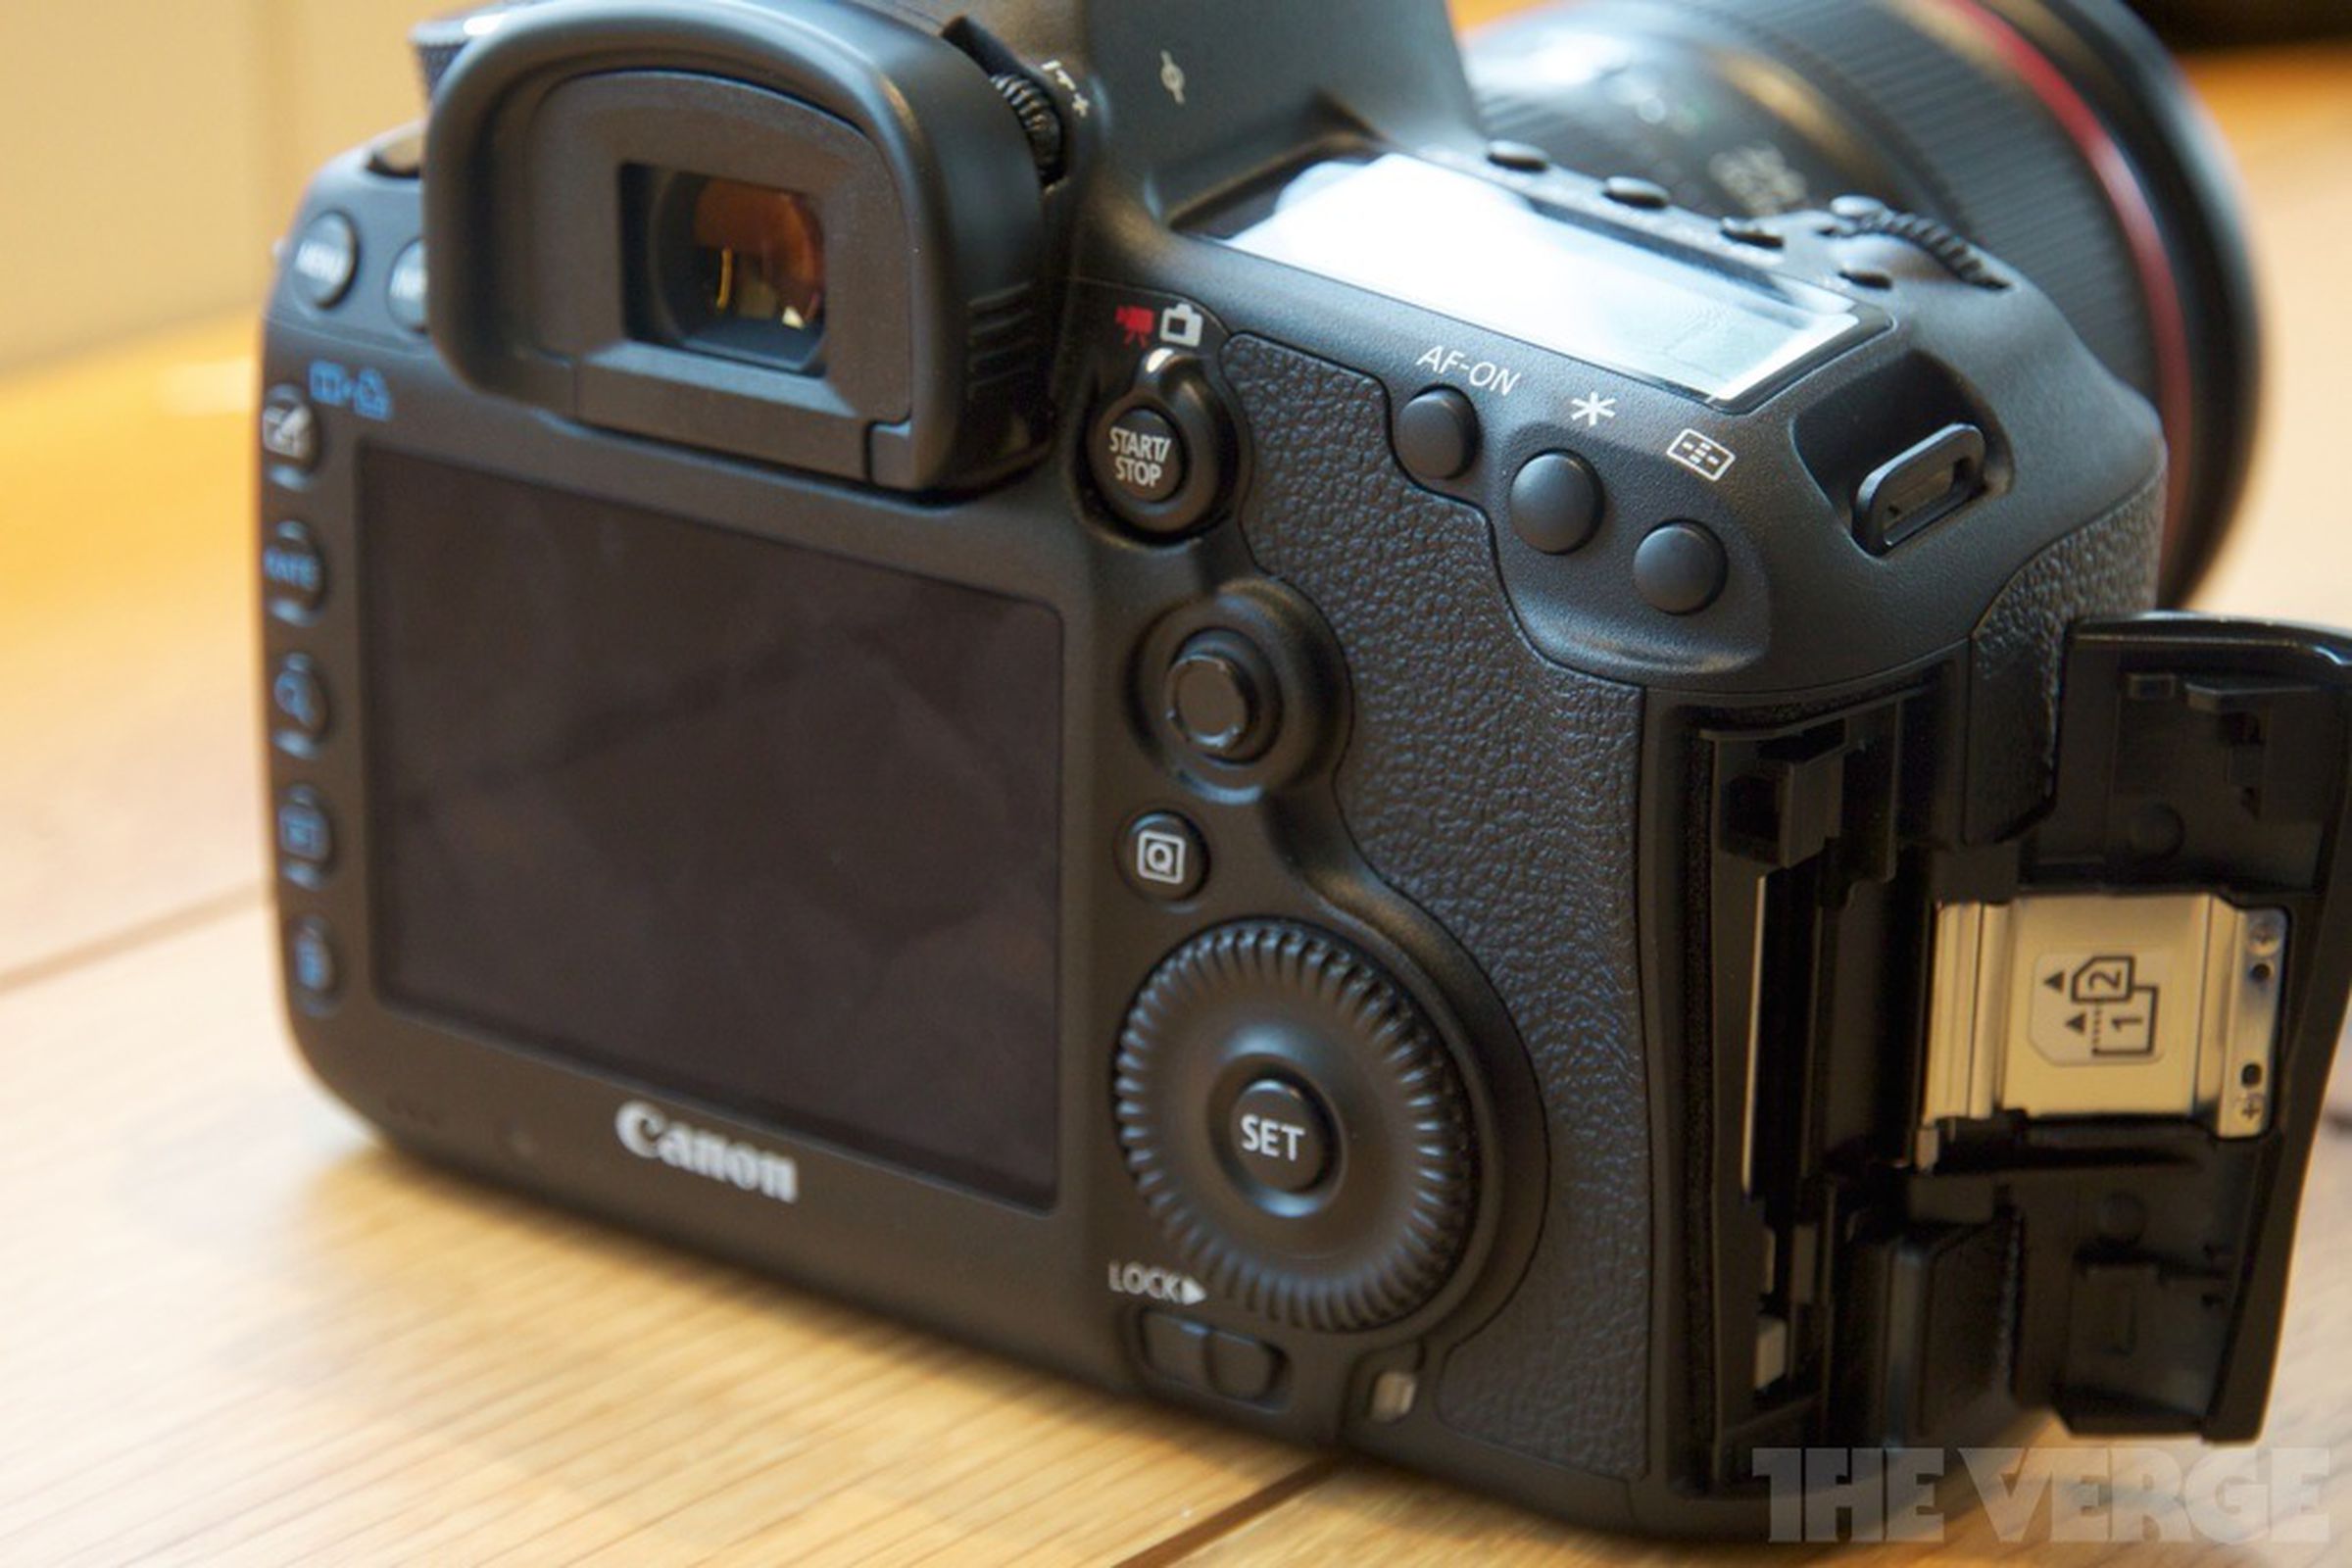 Gallery Photo: Canon EOS 5D Mark III hands-on photos